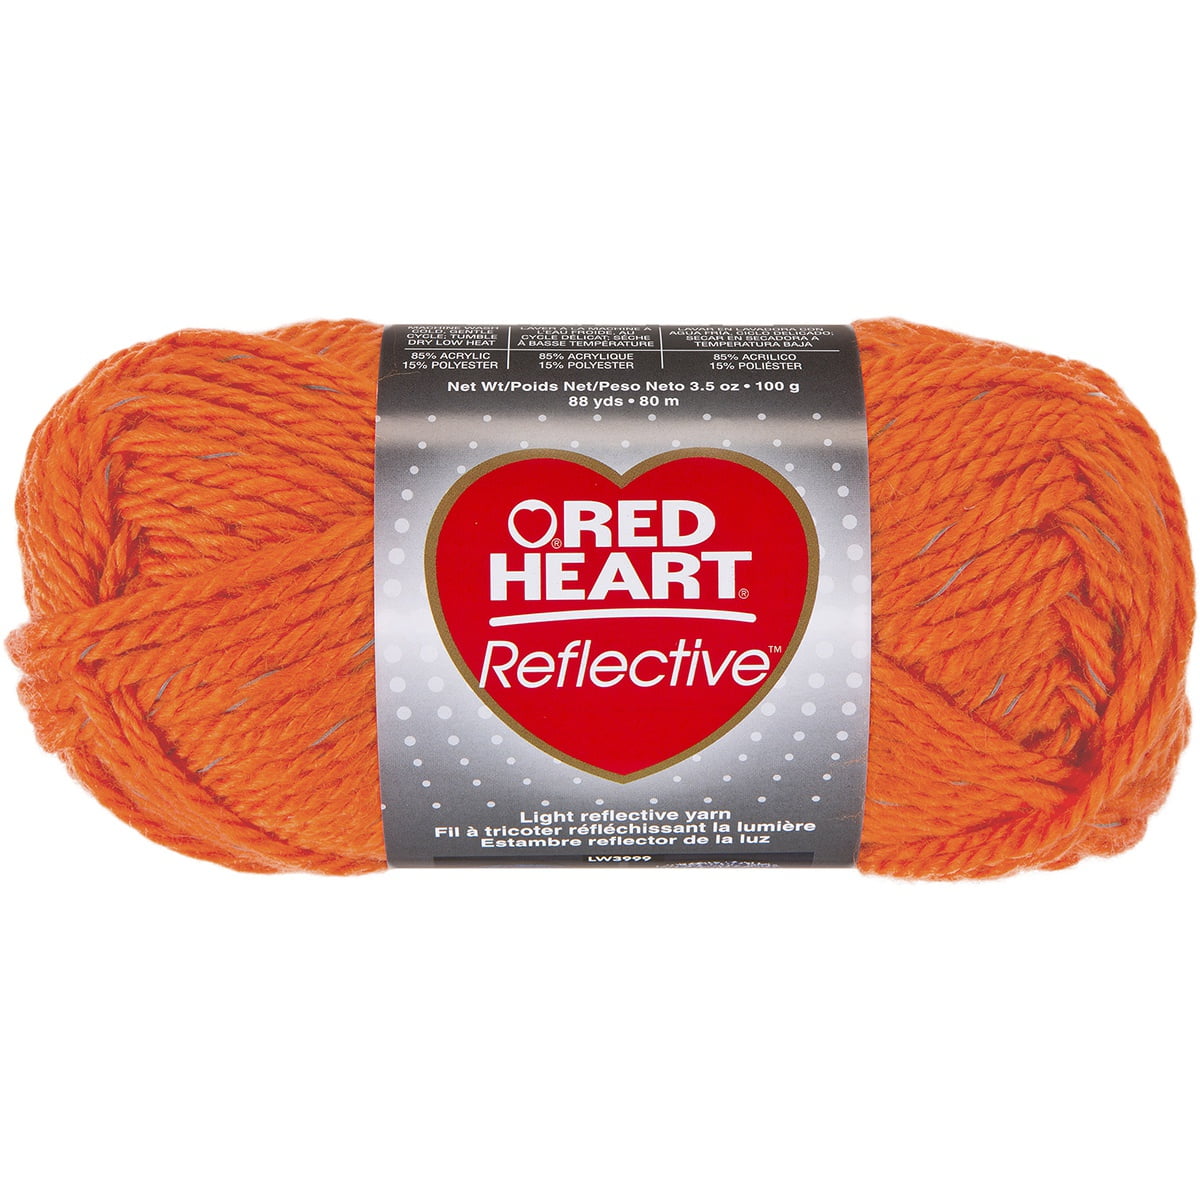 Knitting Multi Colored Yarn Orange Red Stock Photo 158911955